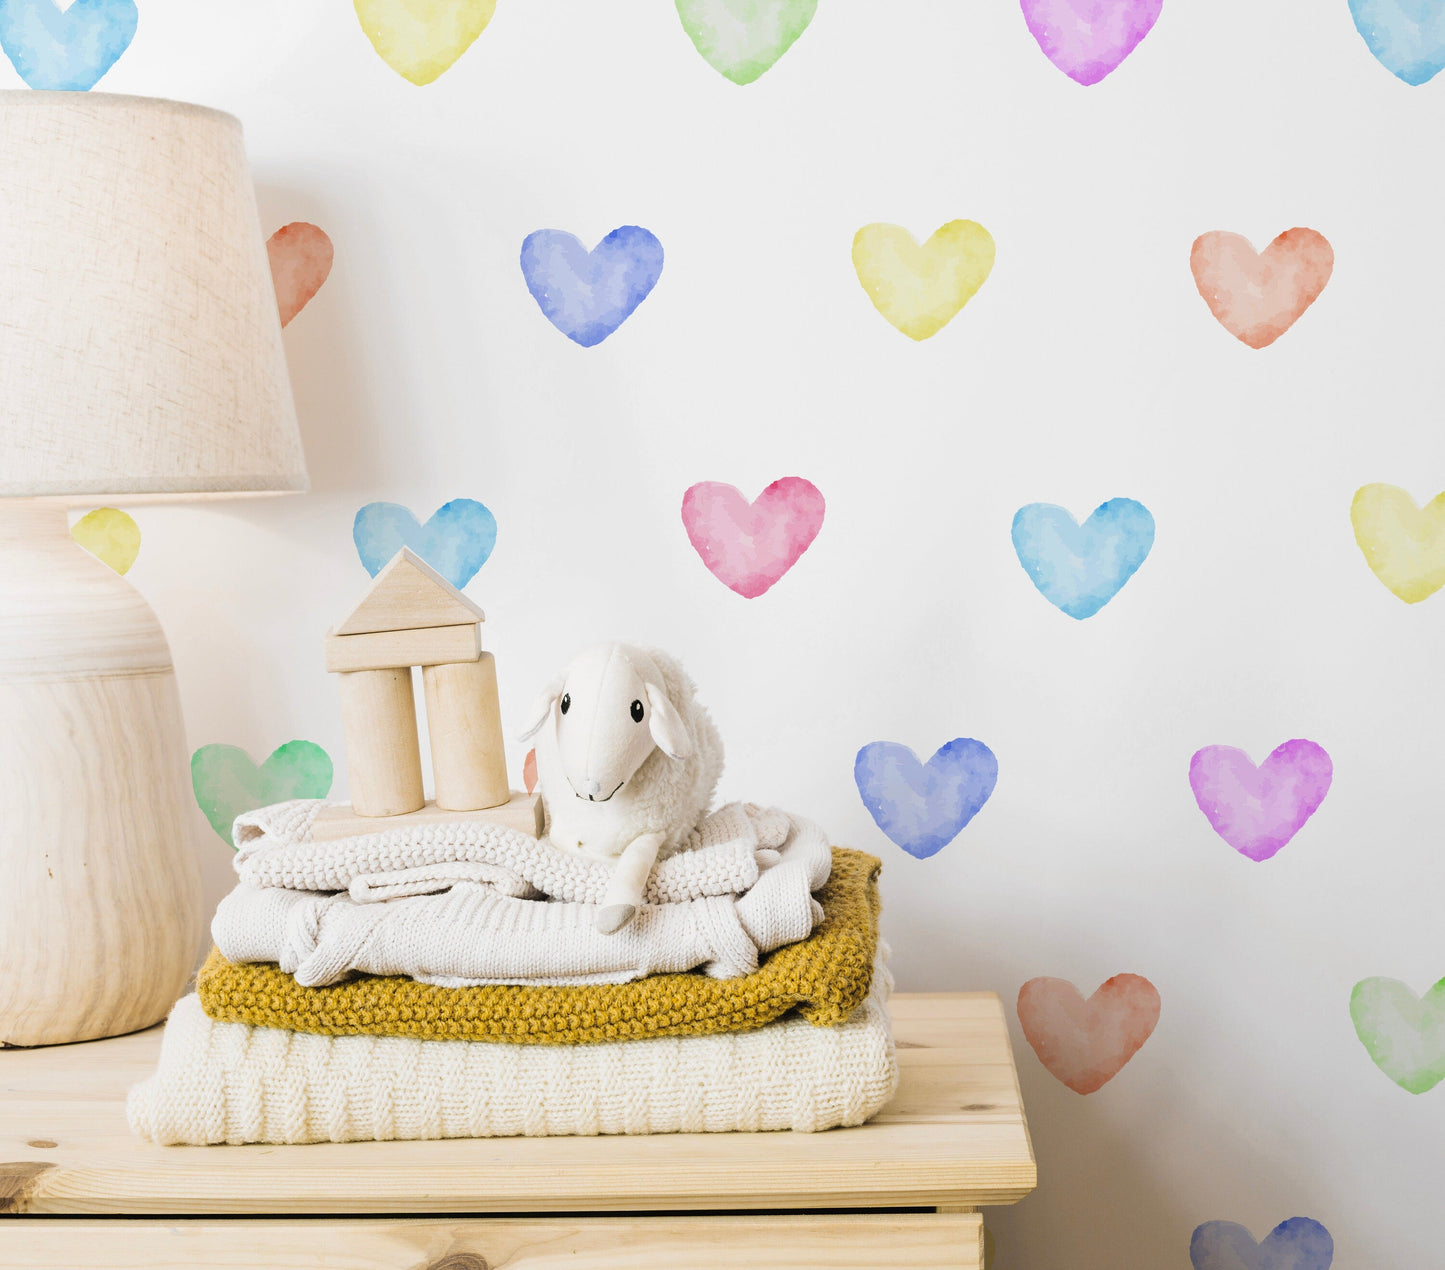 Hearts Wall Decal, Watercolor Rainbow Polka Dots, Heart Stickers for Nursery, Playroom, Classroom Decor, LF091